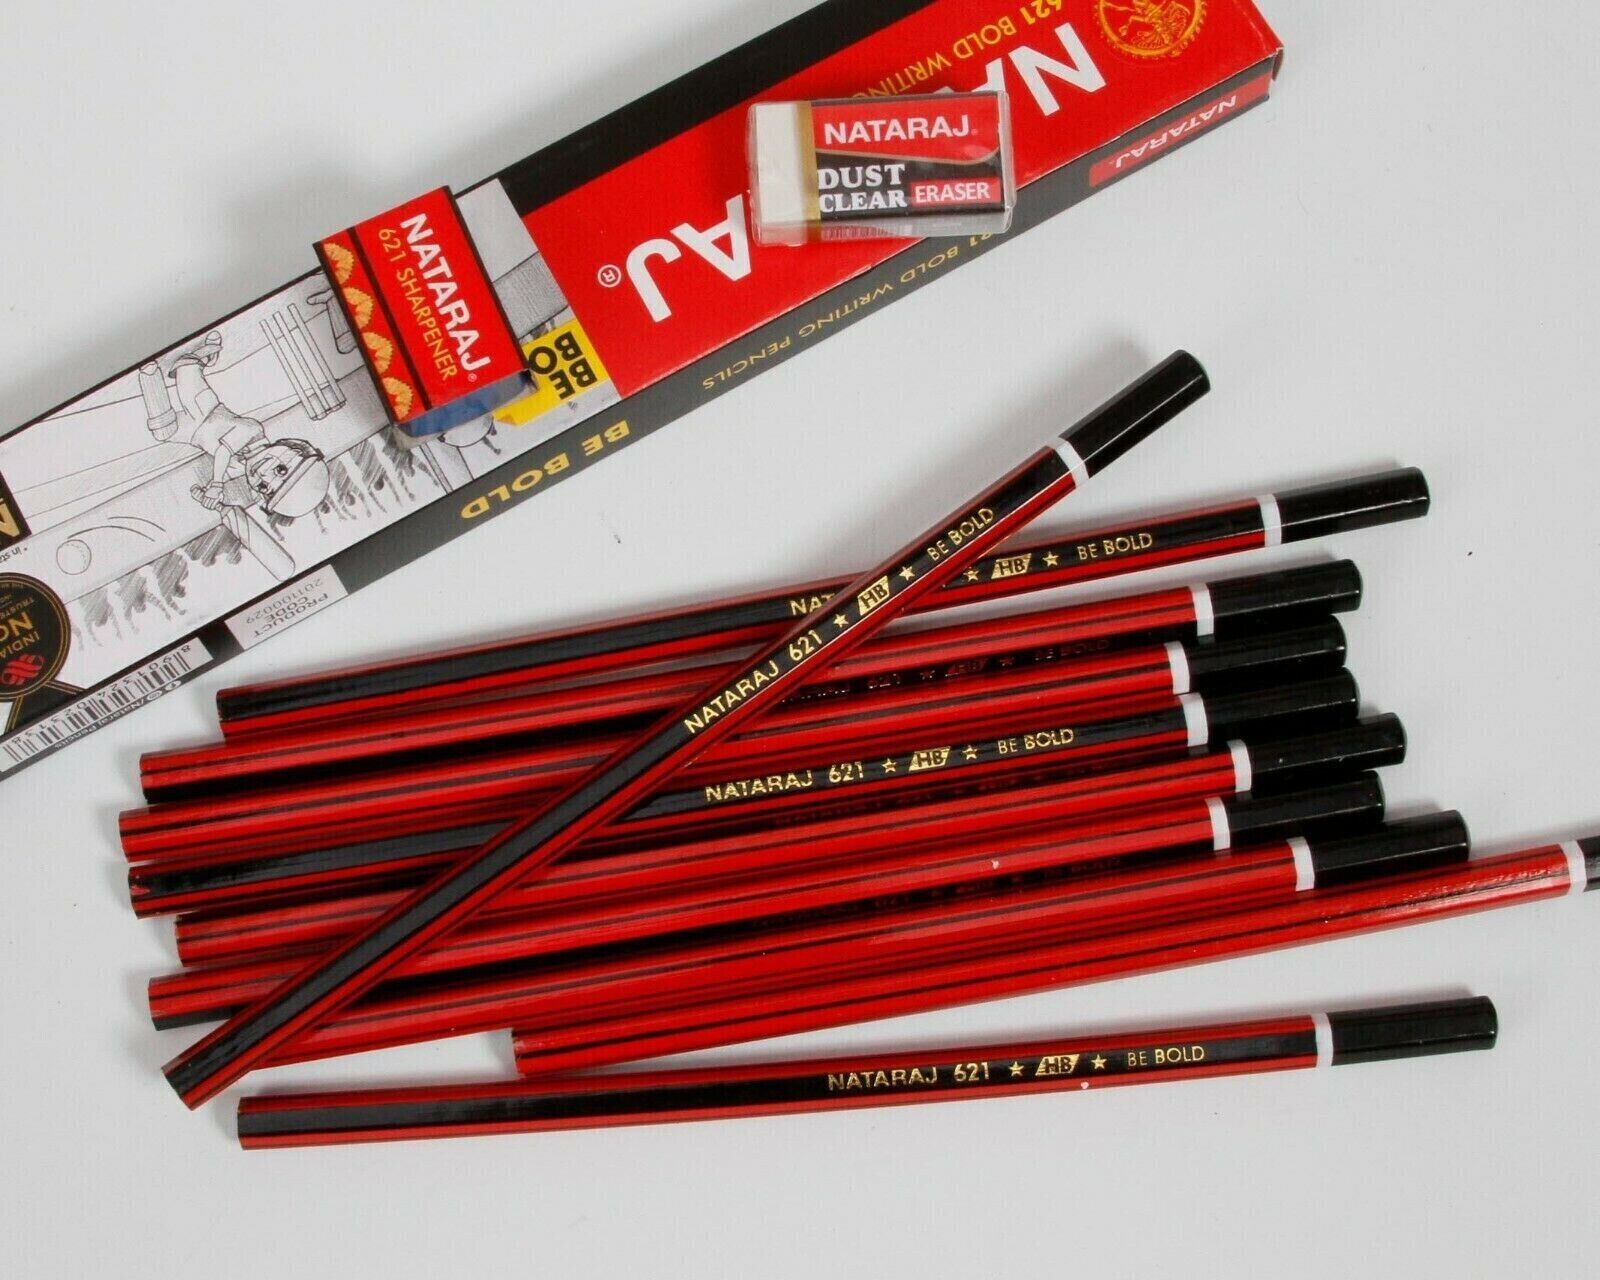 30 Nataraj Pencils for Clear, Sharp and Bold Writing + 3 Eraser + 3 Sharpeners